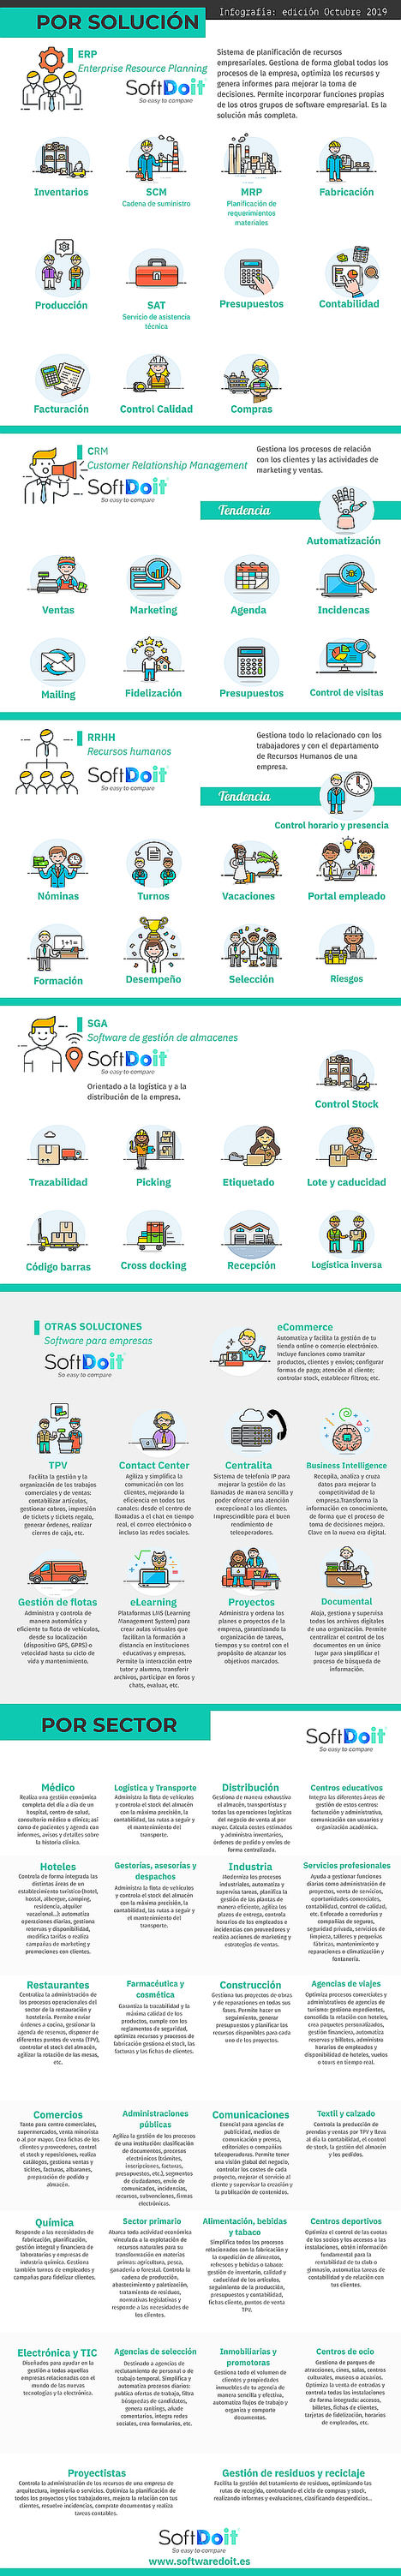 SoftDoit presenta el “Gran mapa del software empresarial”